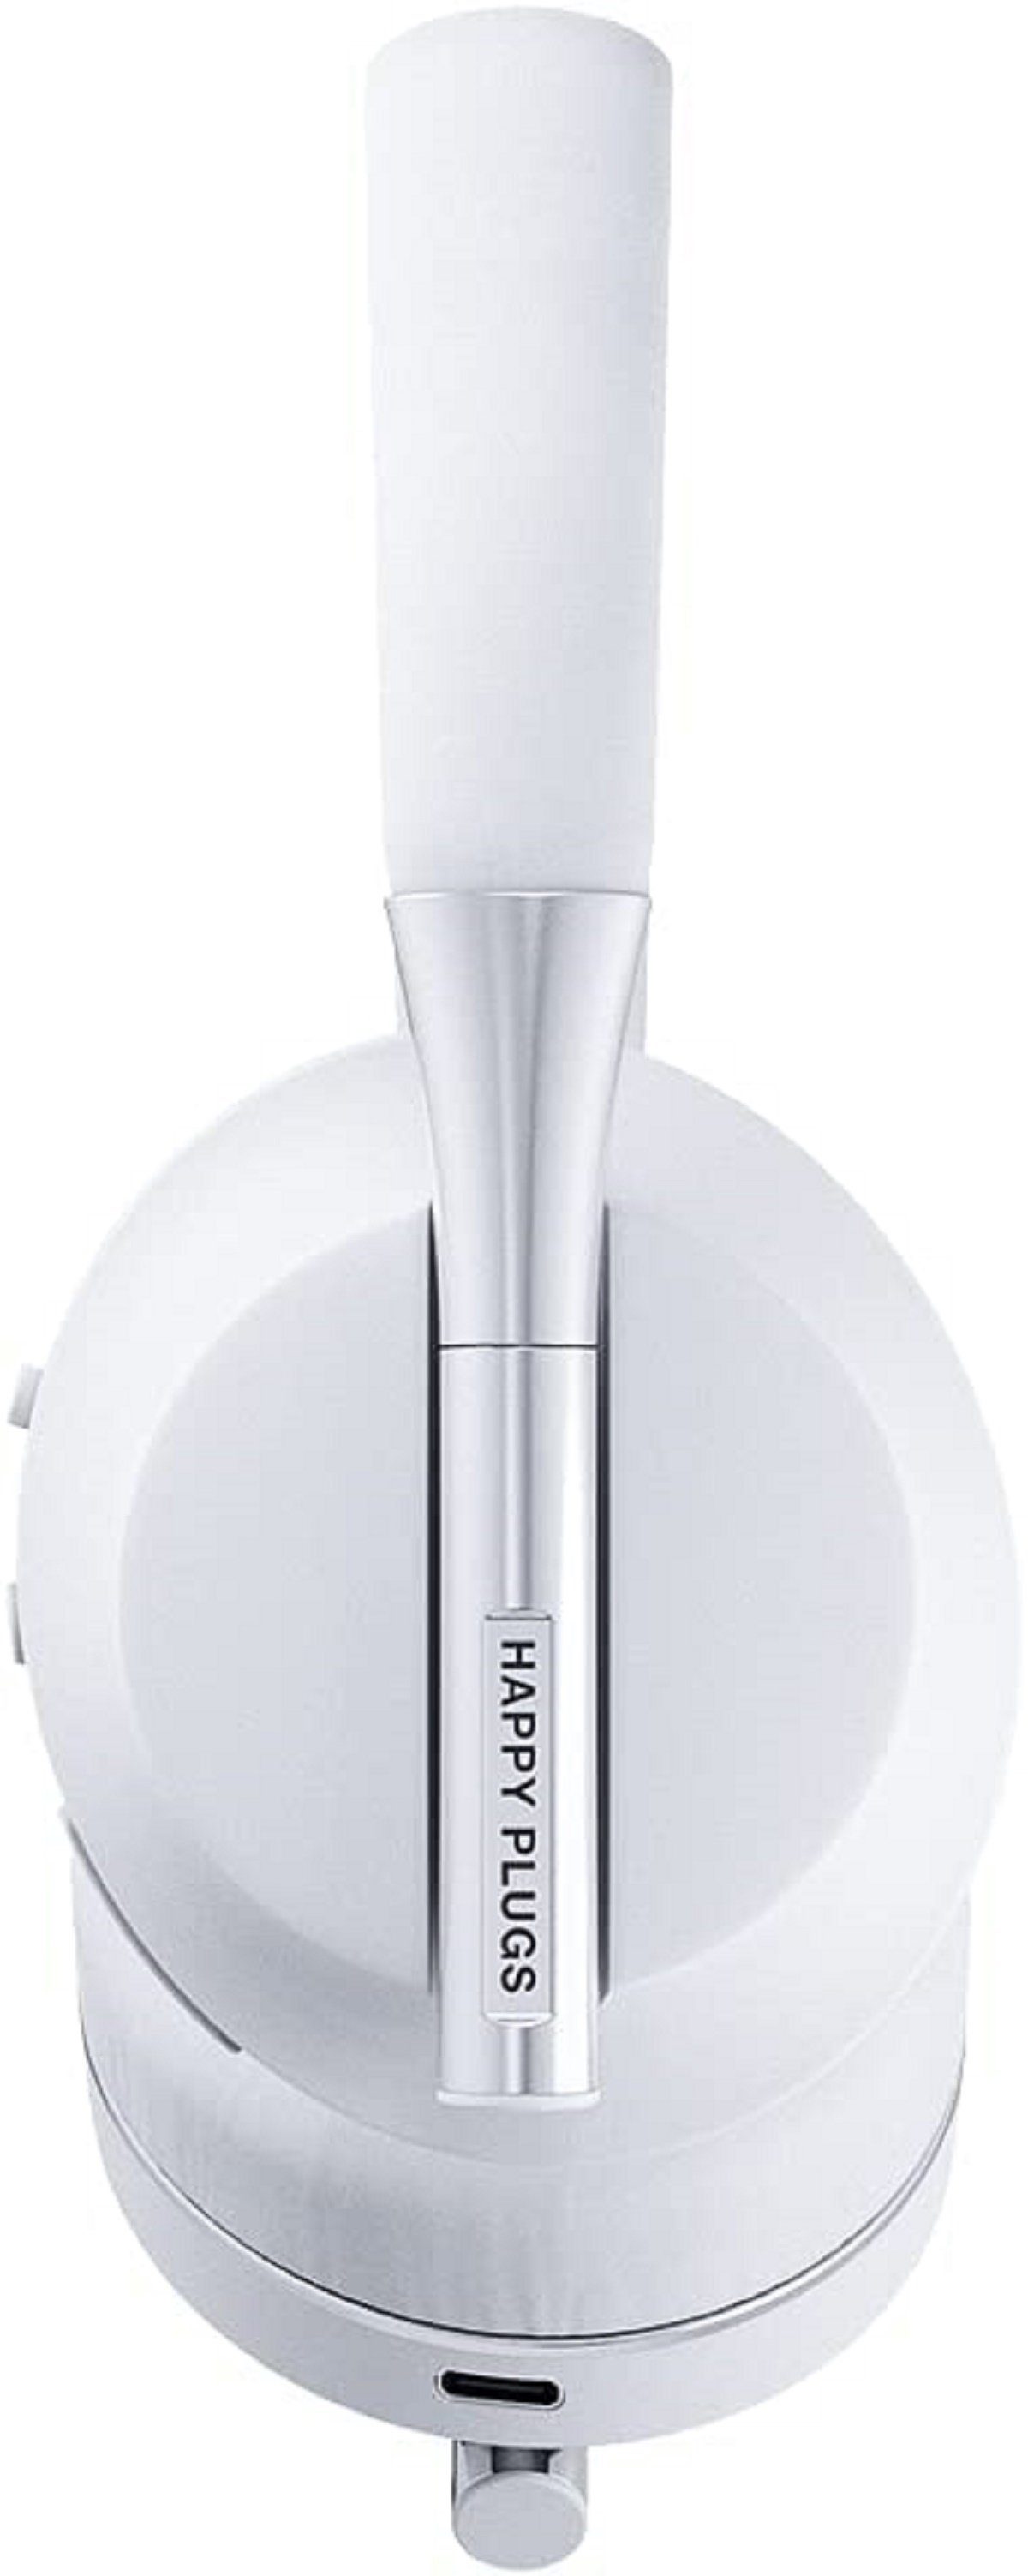 Plugs Kabellos 85dB Bluetooth Happy Over-Ear-Kopfhörer Headphones Wireless